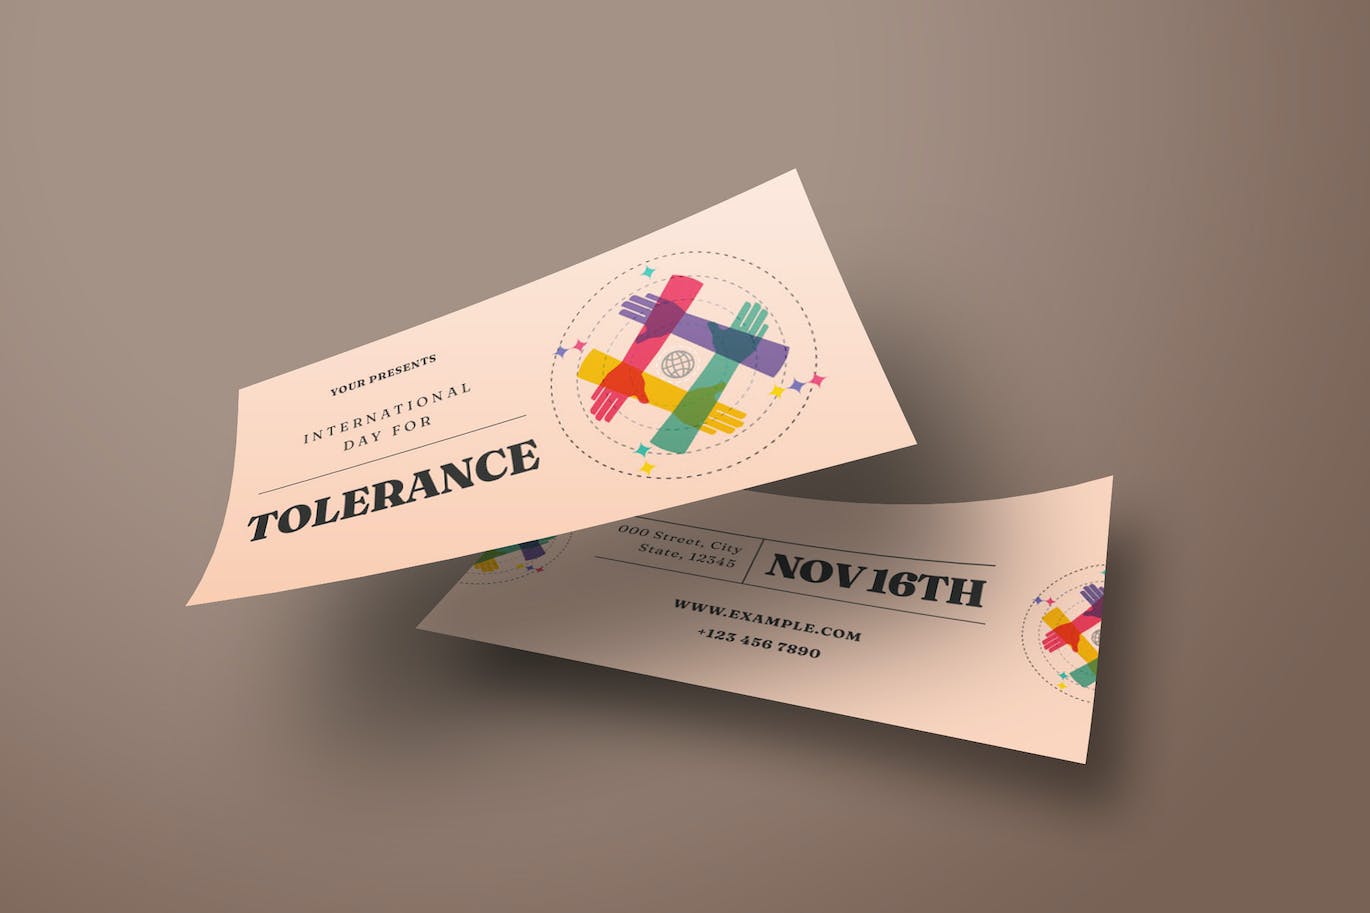 国际宽容日传单设计模板 International Day For Tolerance DL Flyer 设计素材 第2张